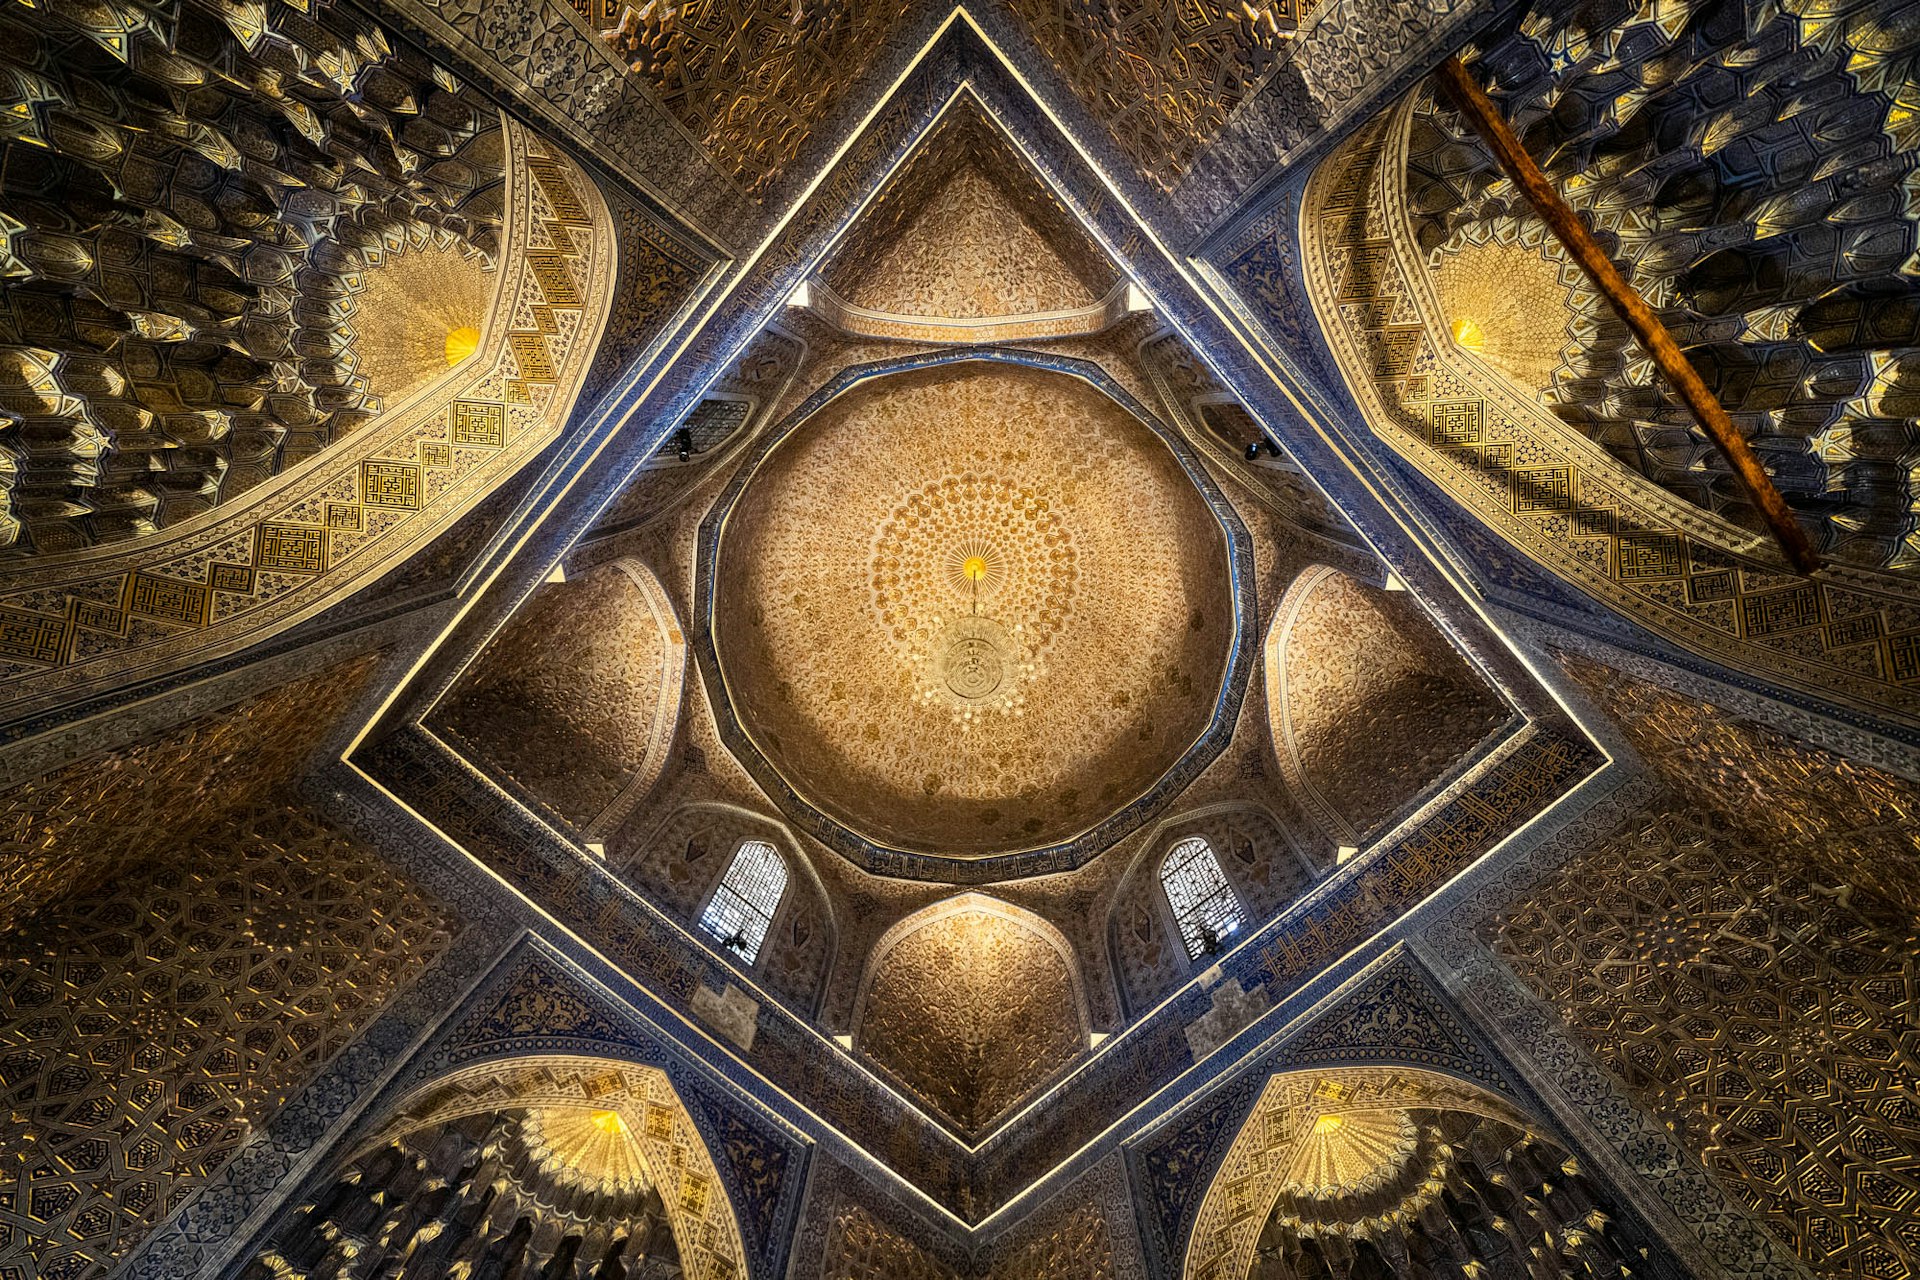 Ceiling details from the Guri Amir Mausoleum, Samarkand